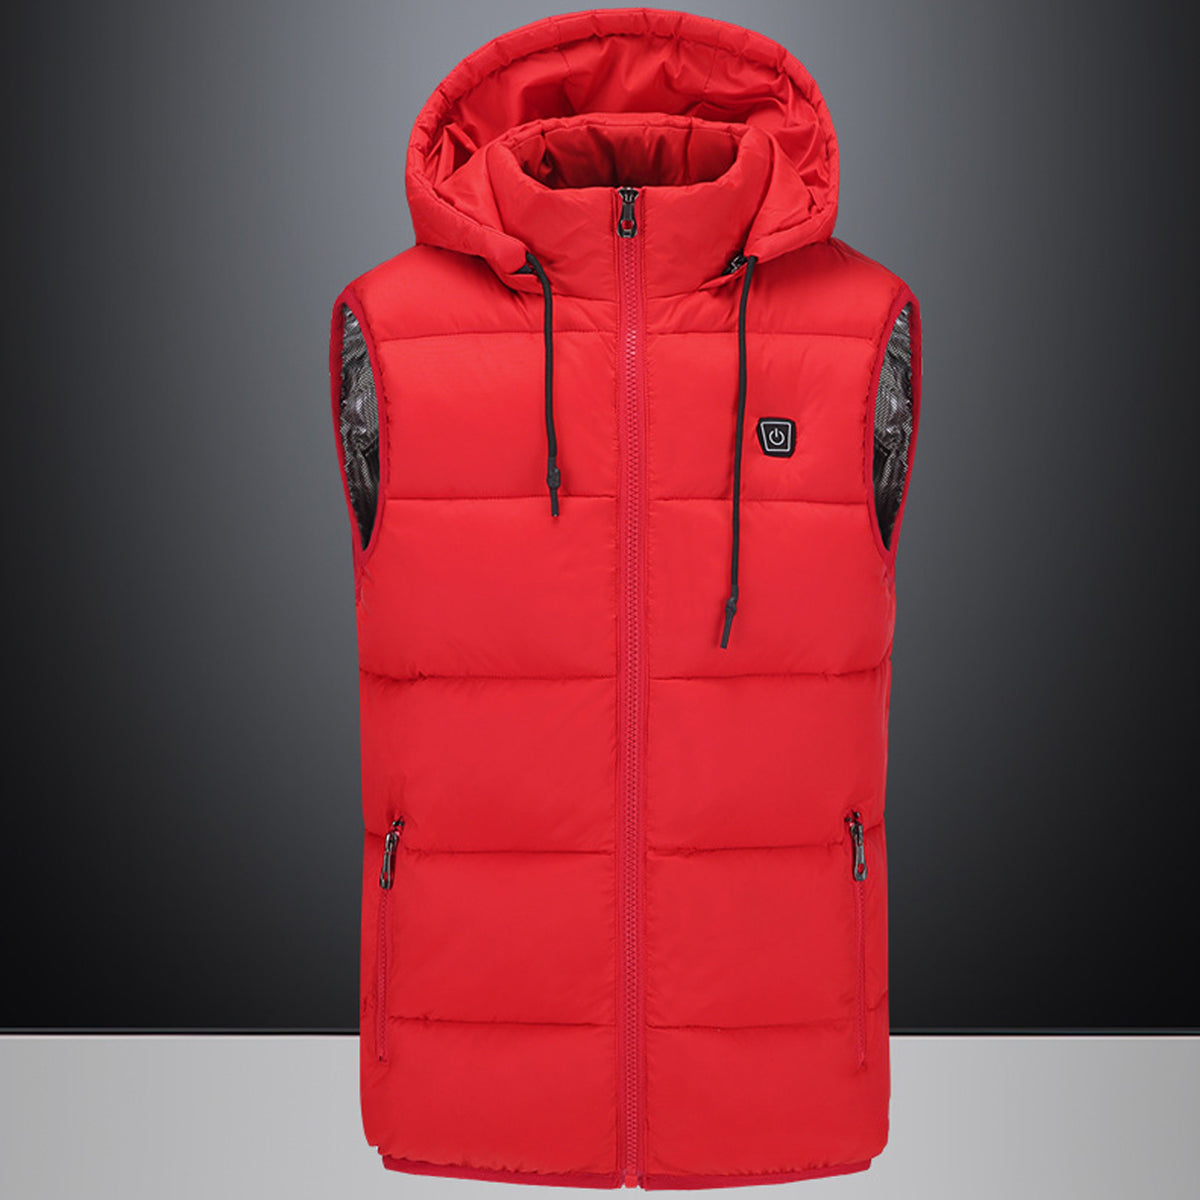 Firebrick 25-45°C Electric Heated Vest Waistcoat Hooded Winter Warmer USB Charge Heating Jacket Clothing